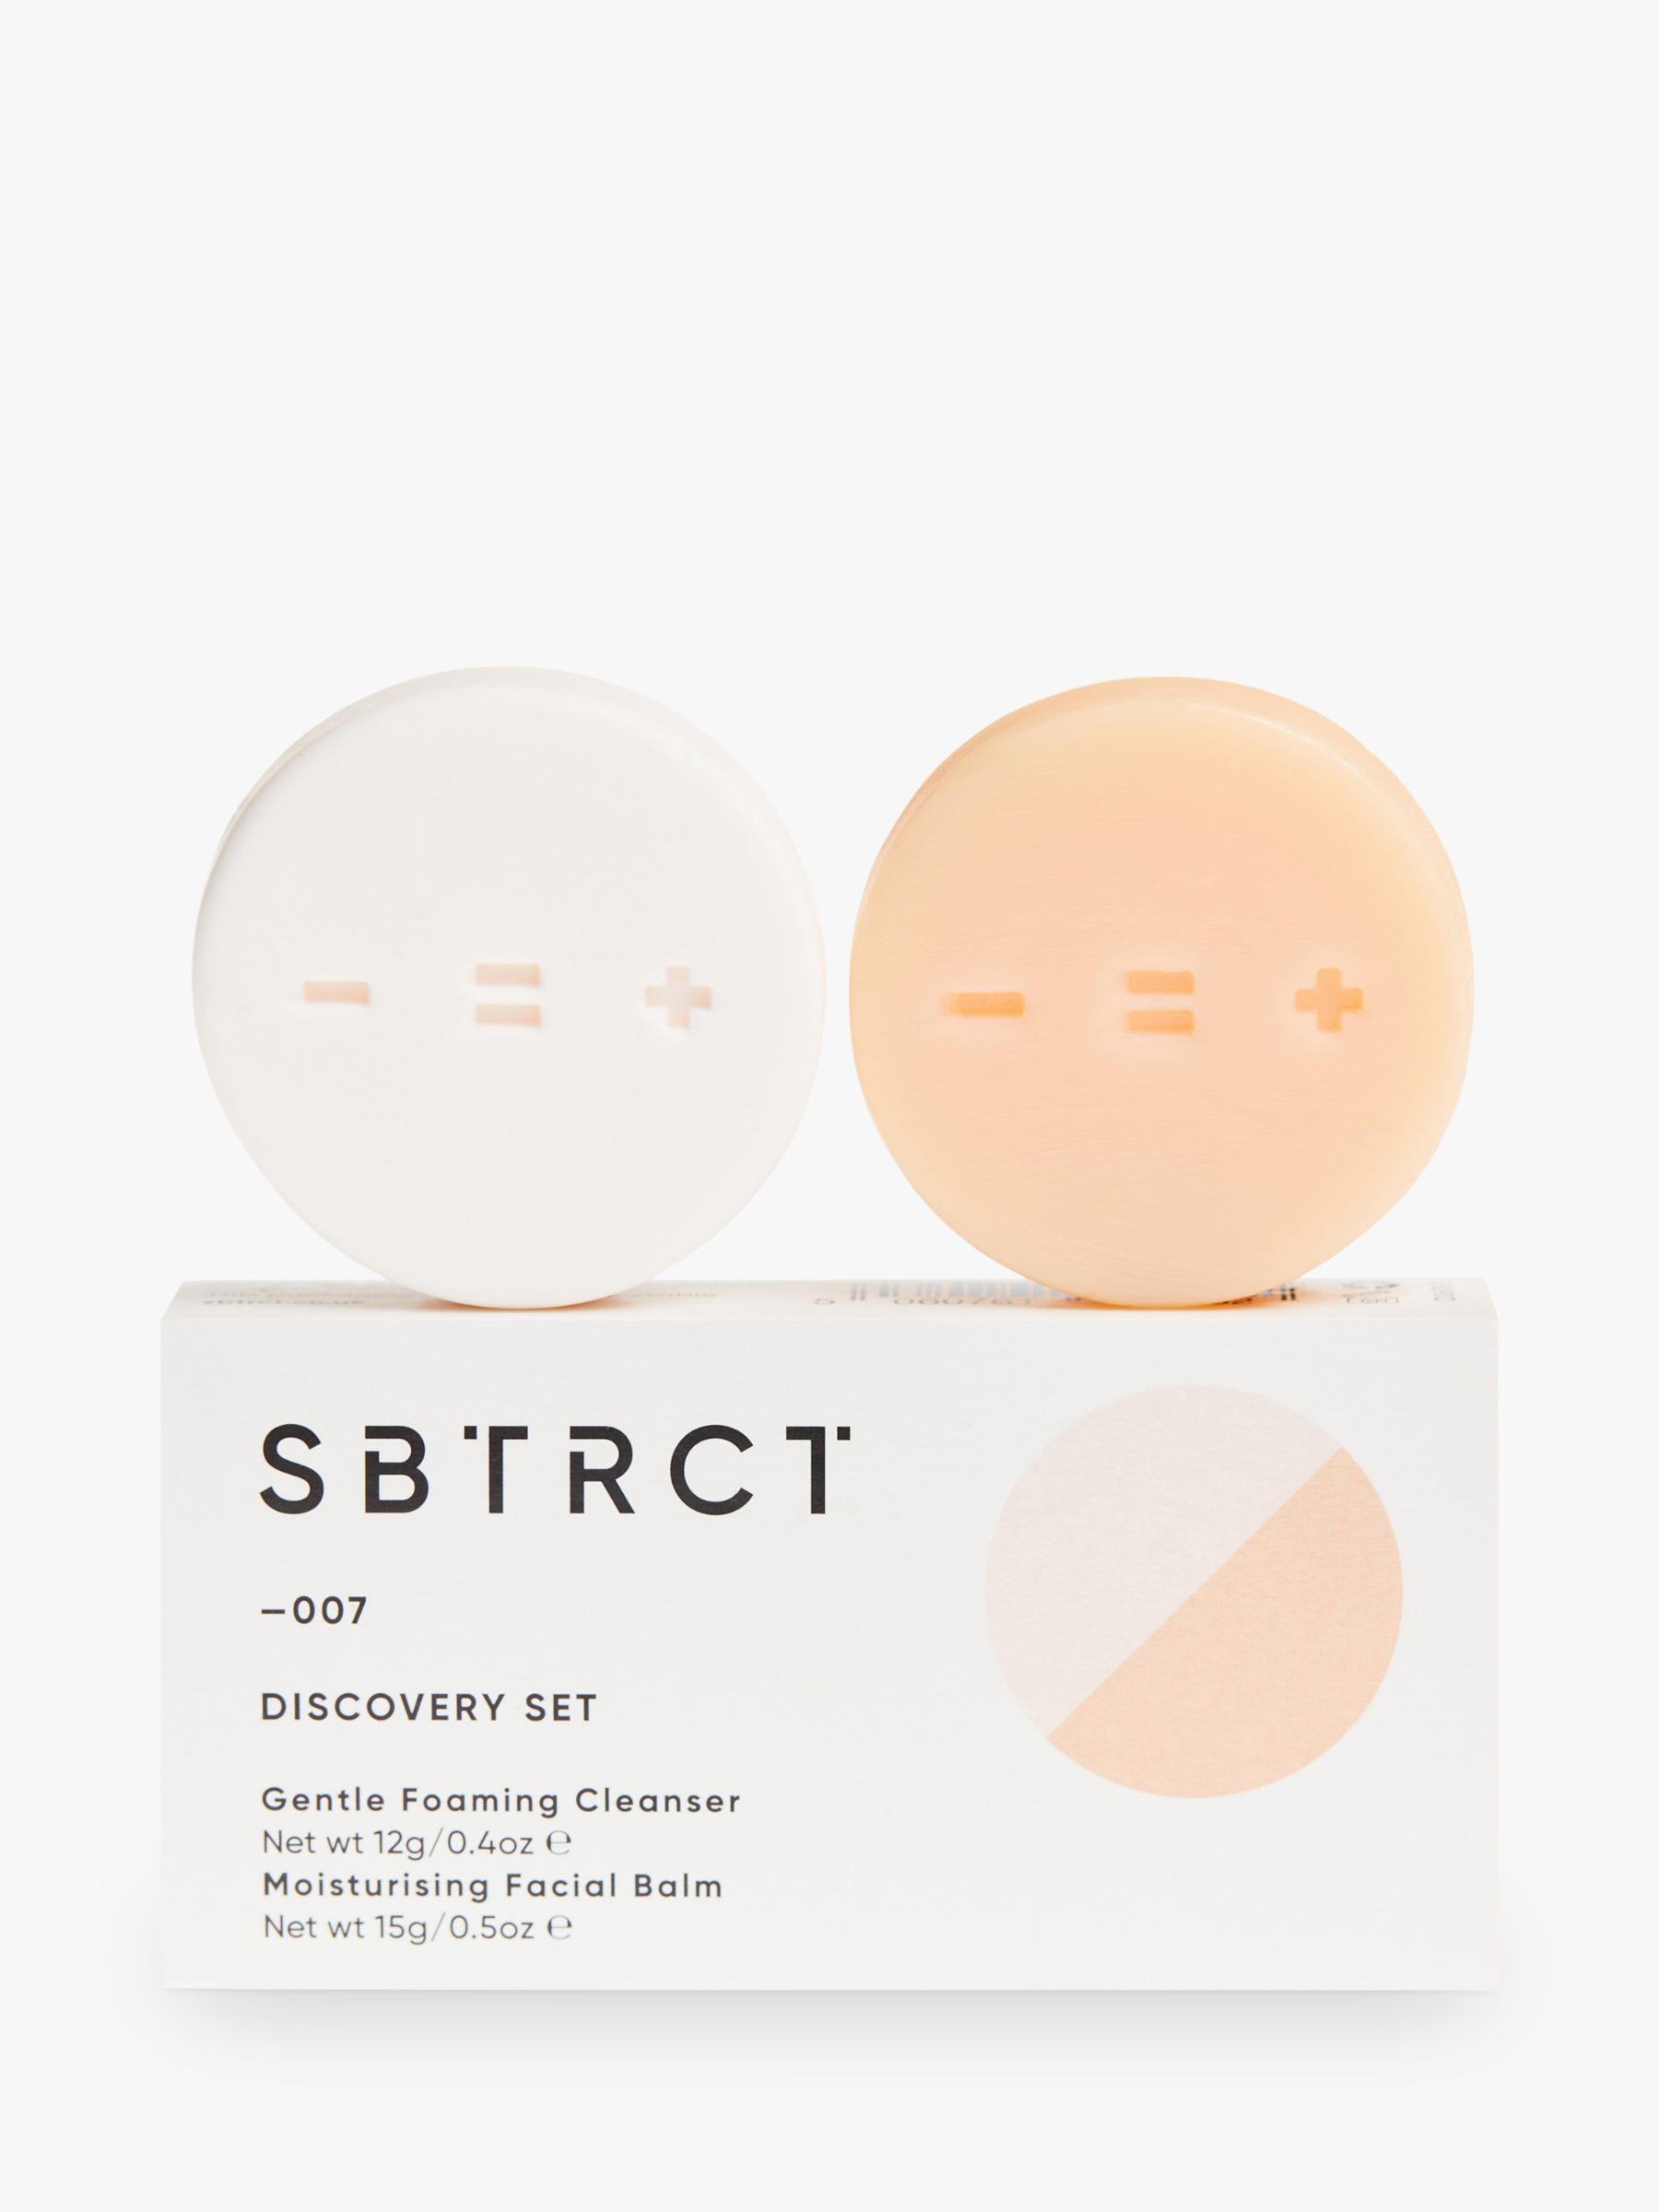 SBTRCT Cleanse + Moisturise Discovery Skincare Gift Set 1